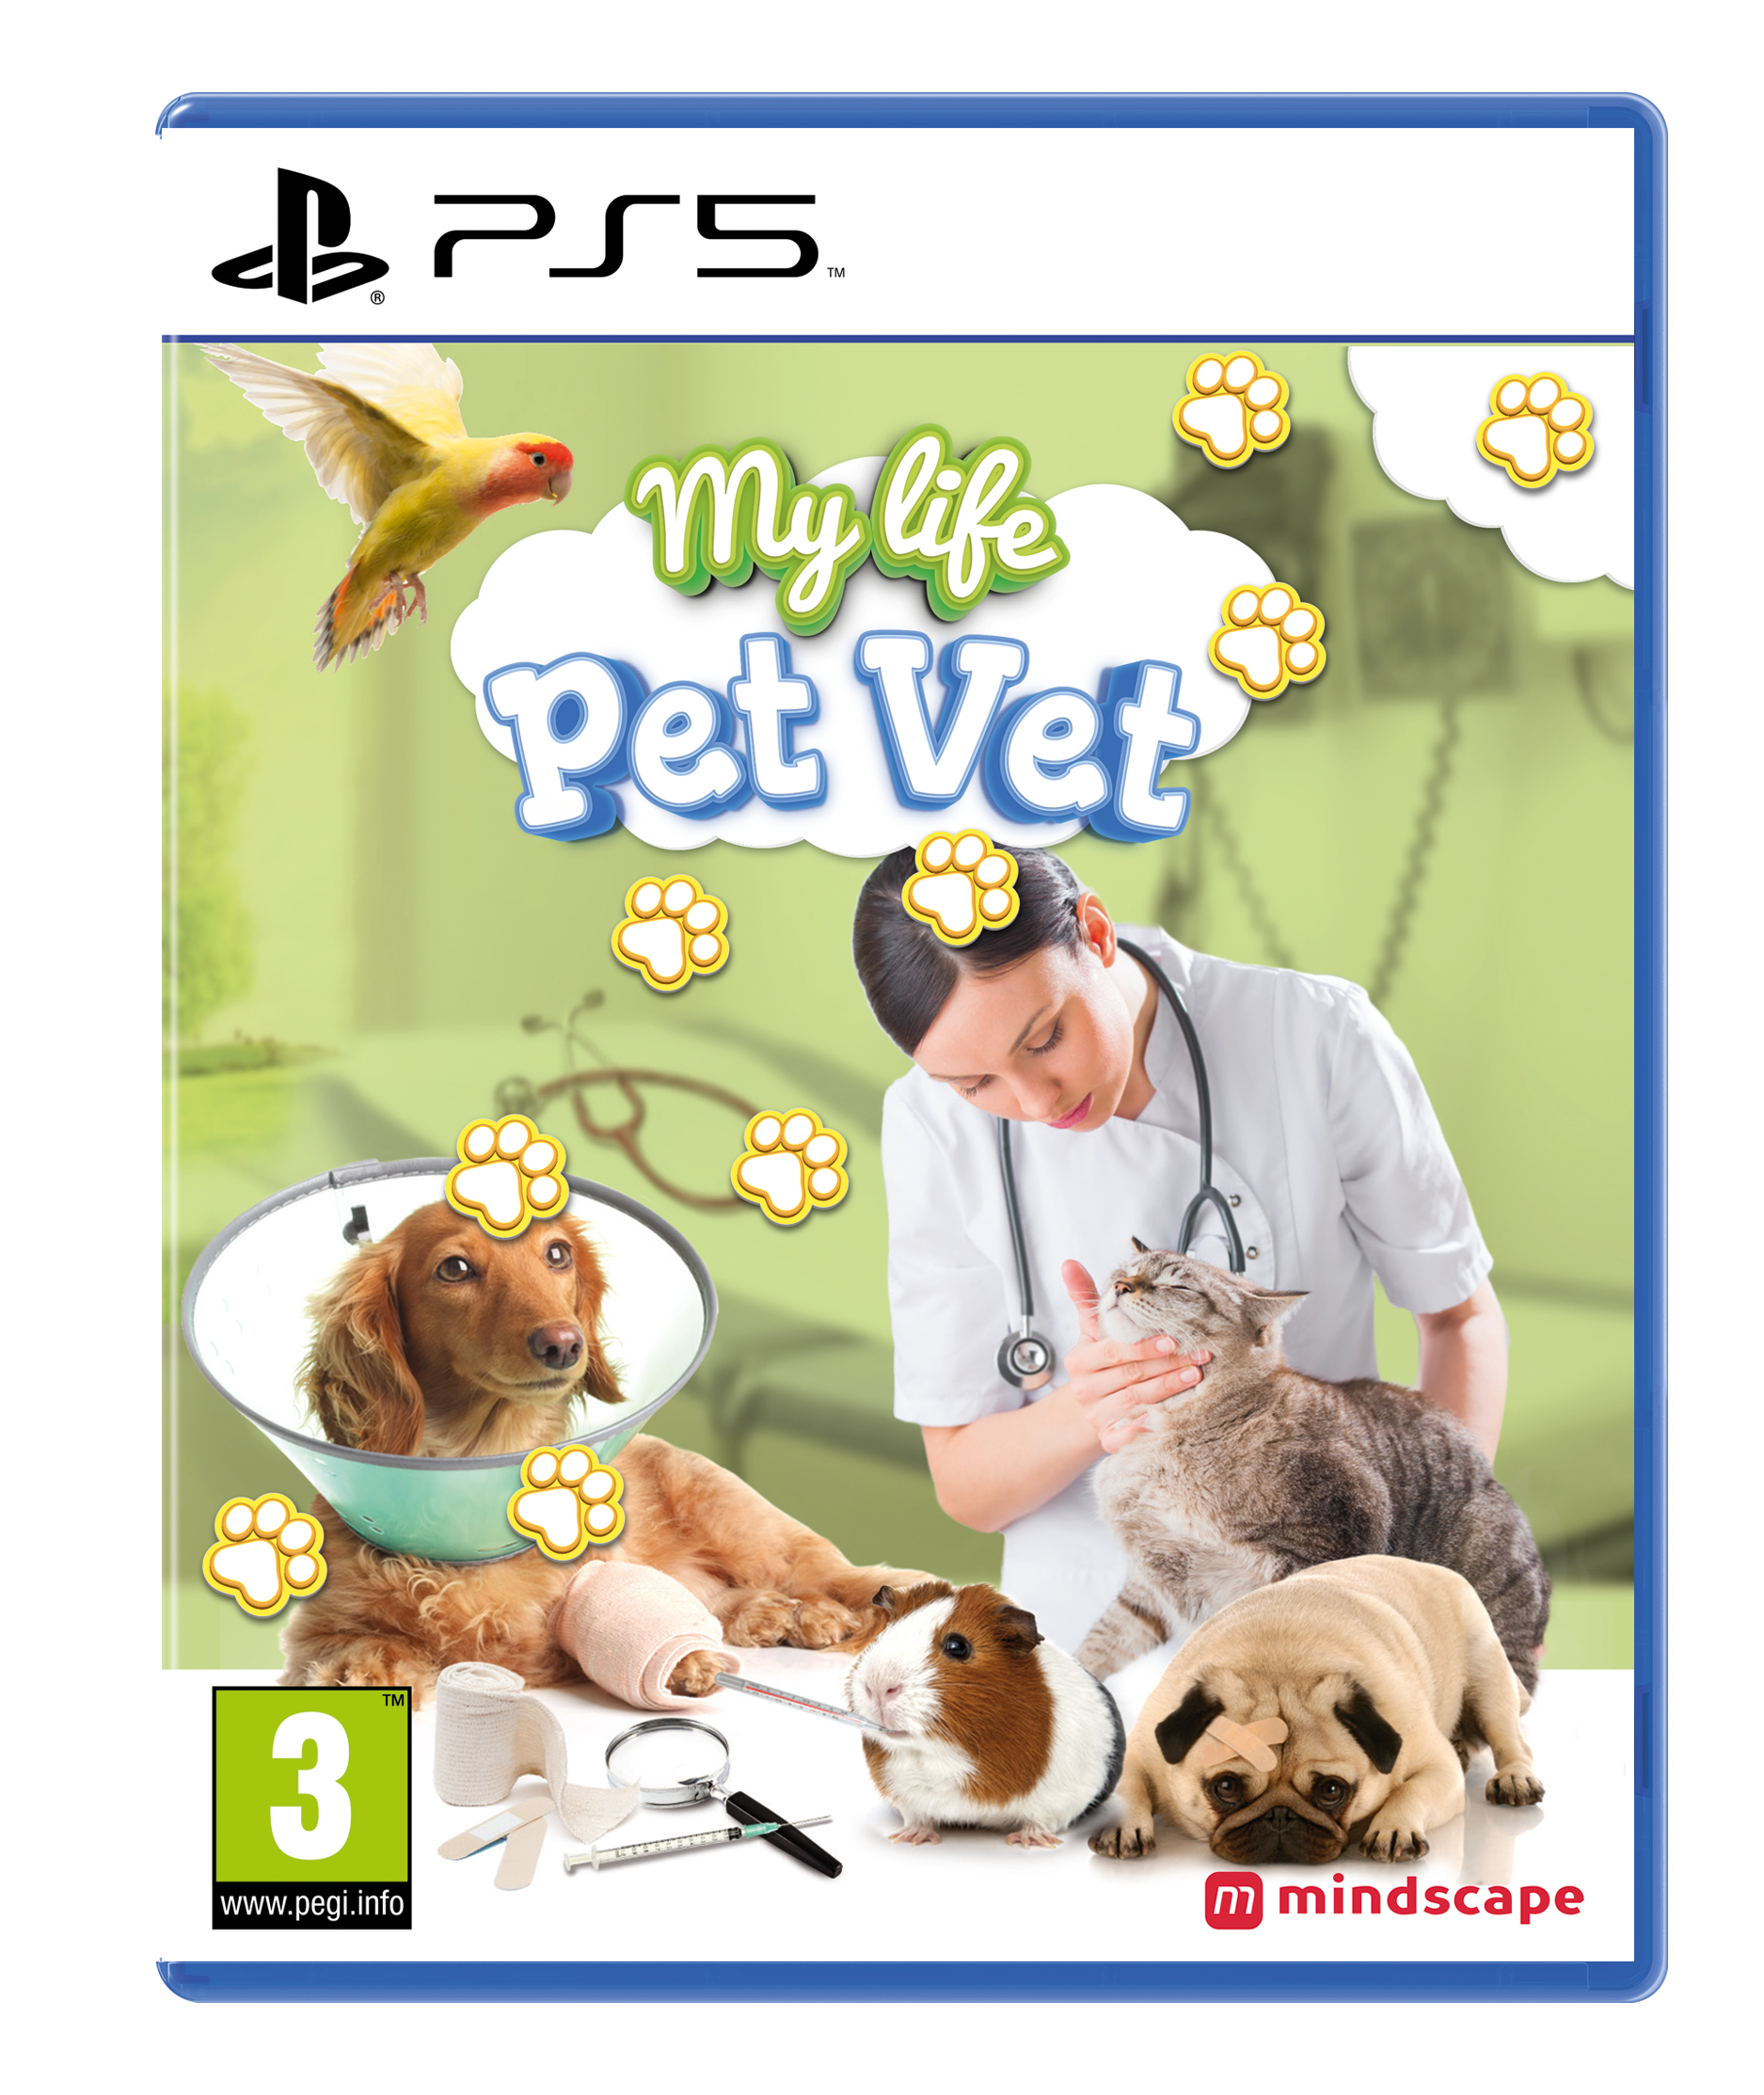 Littlest Pet Shop Garden Nintendo DS Games Animal Planet Vet Life Cats Dogs  Lot